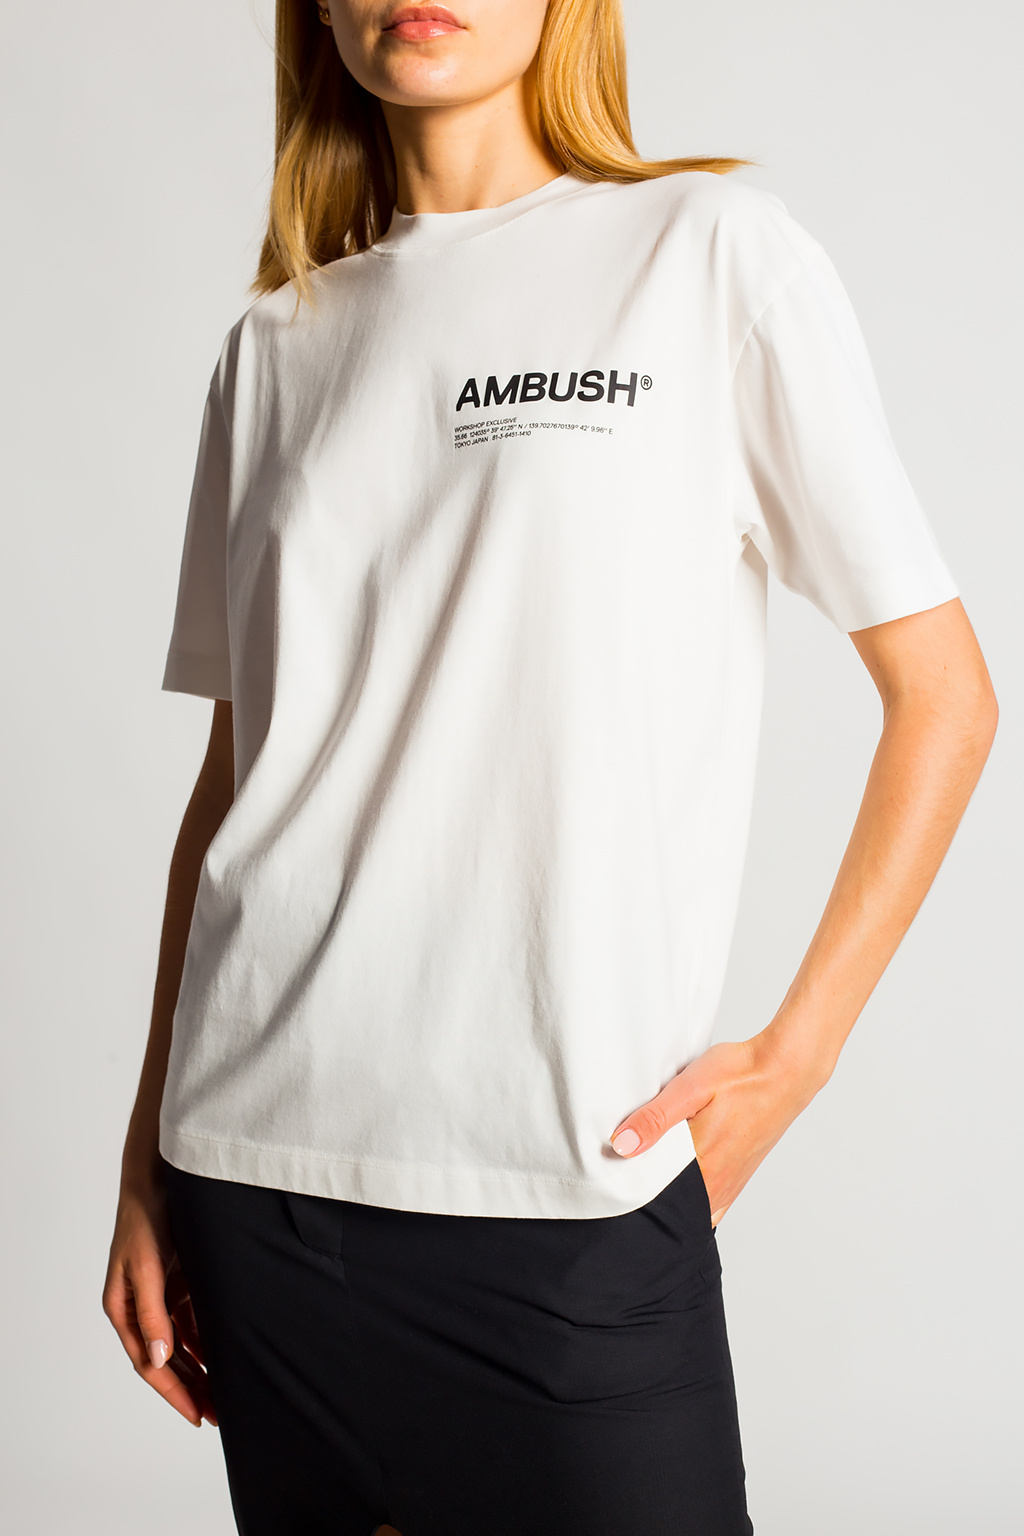 Ambush Womans Black Cotton Banana Long Sleeve T-shirt With Cut Out Details